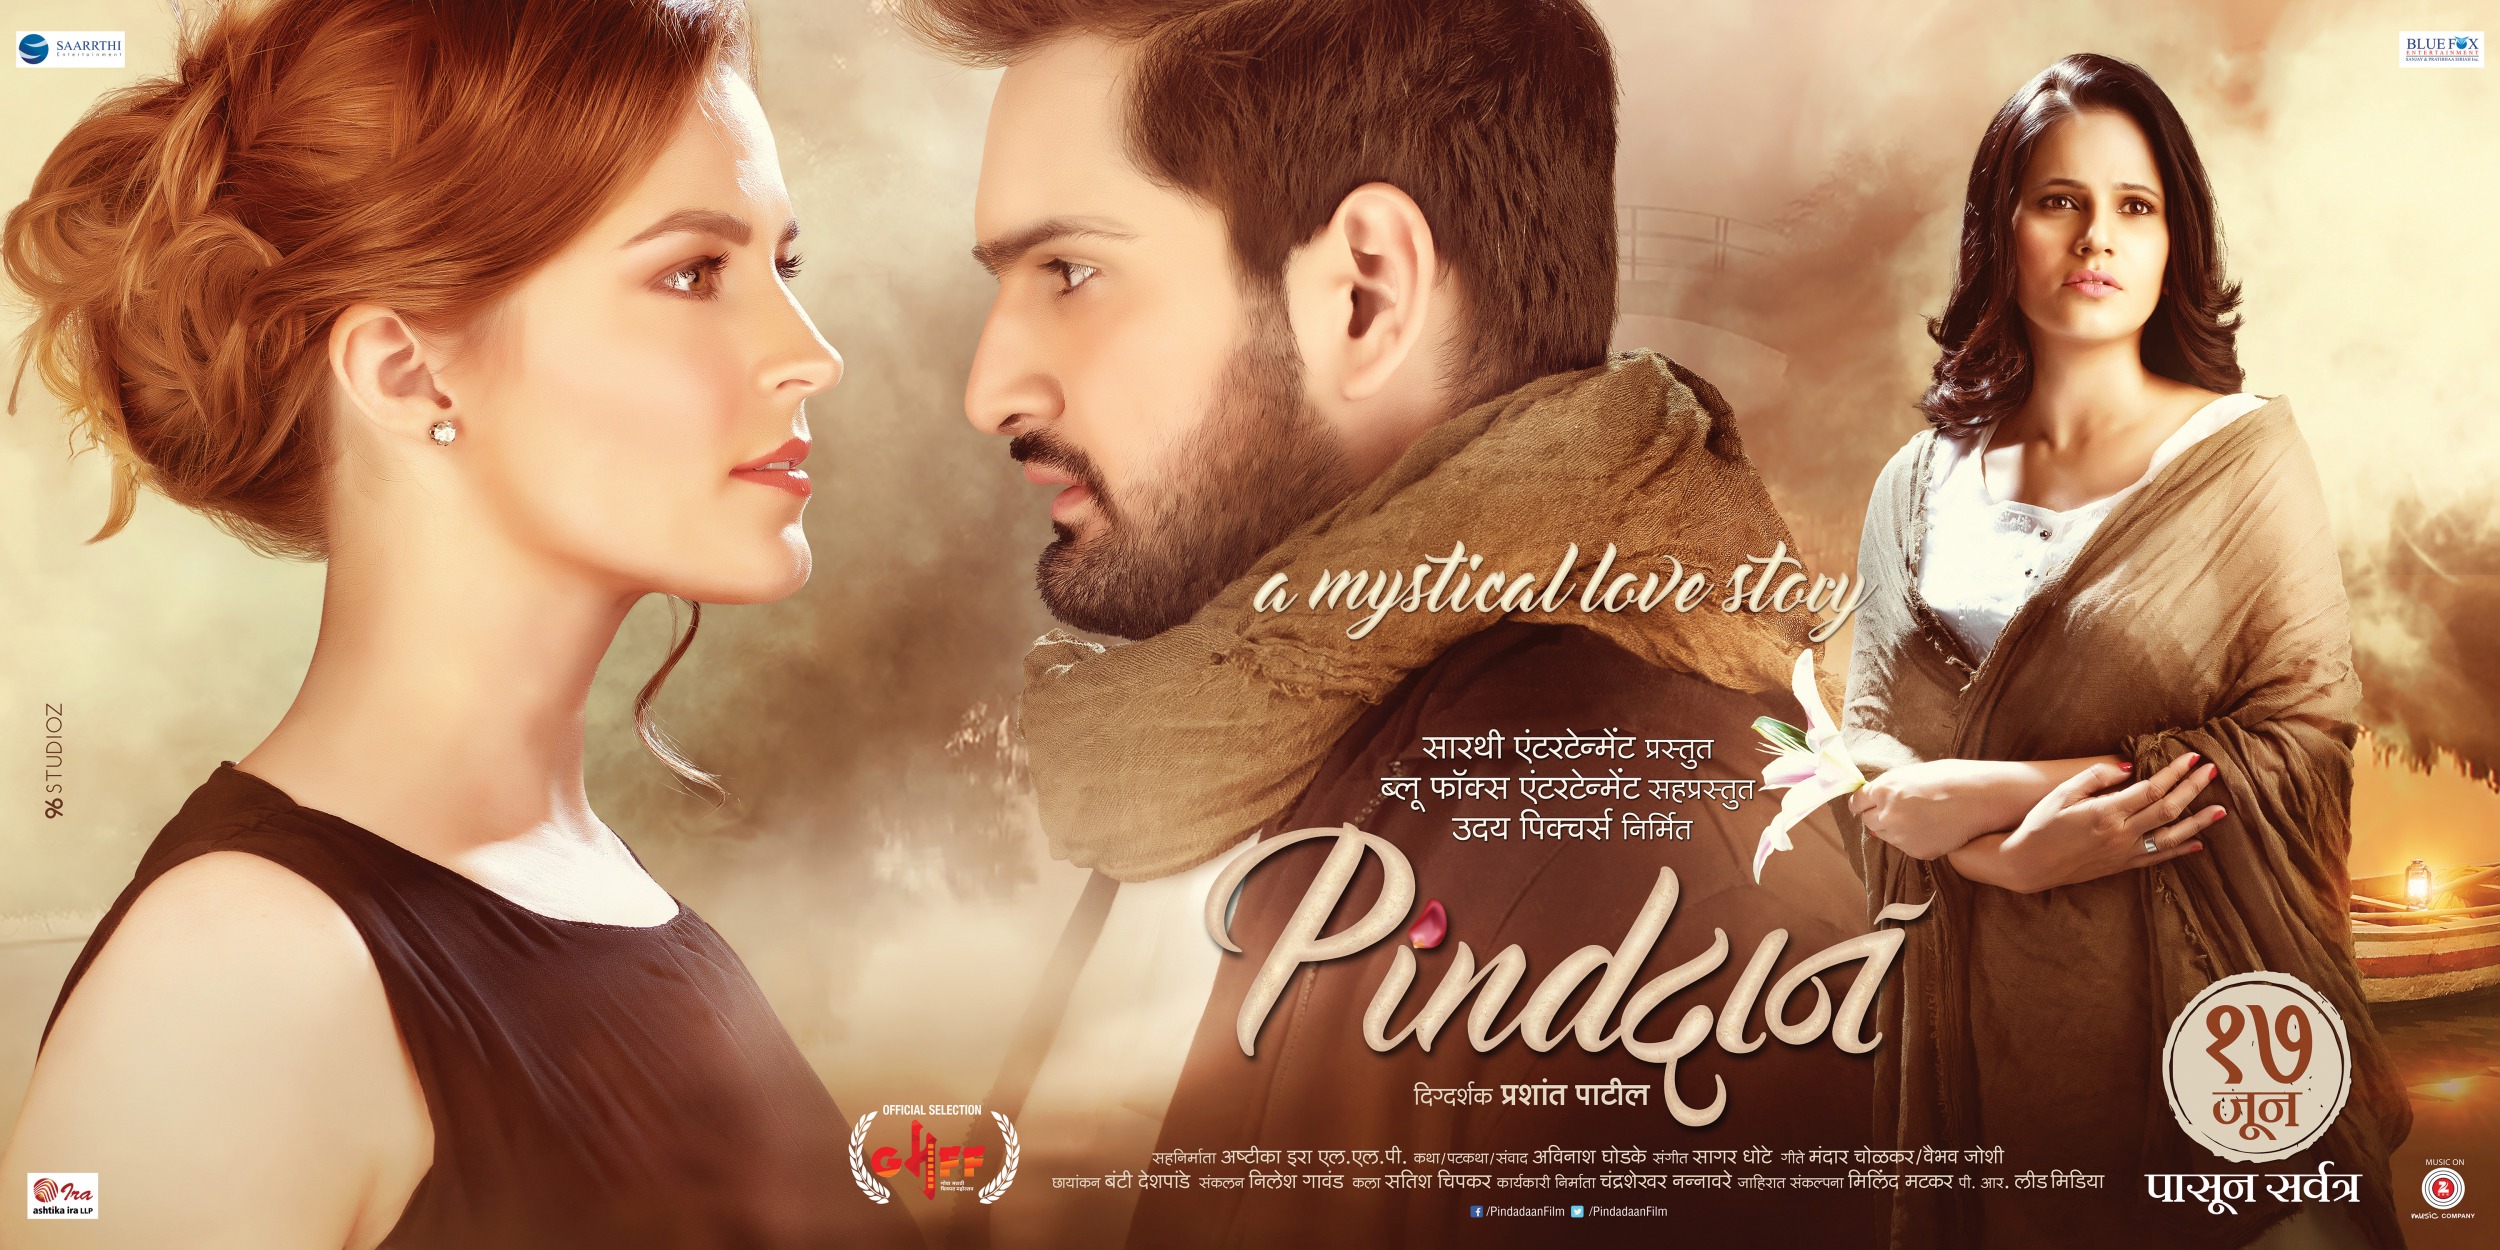 Mega Sized Movie Poster Image for Pindadaan (#11 of 11)